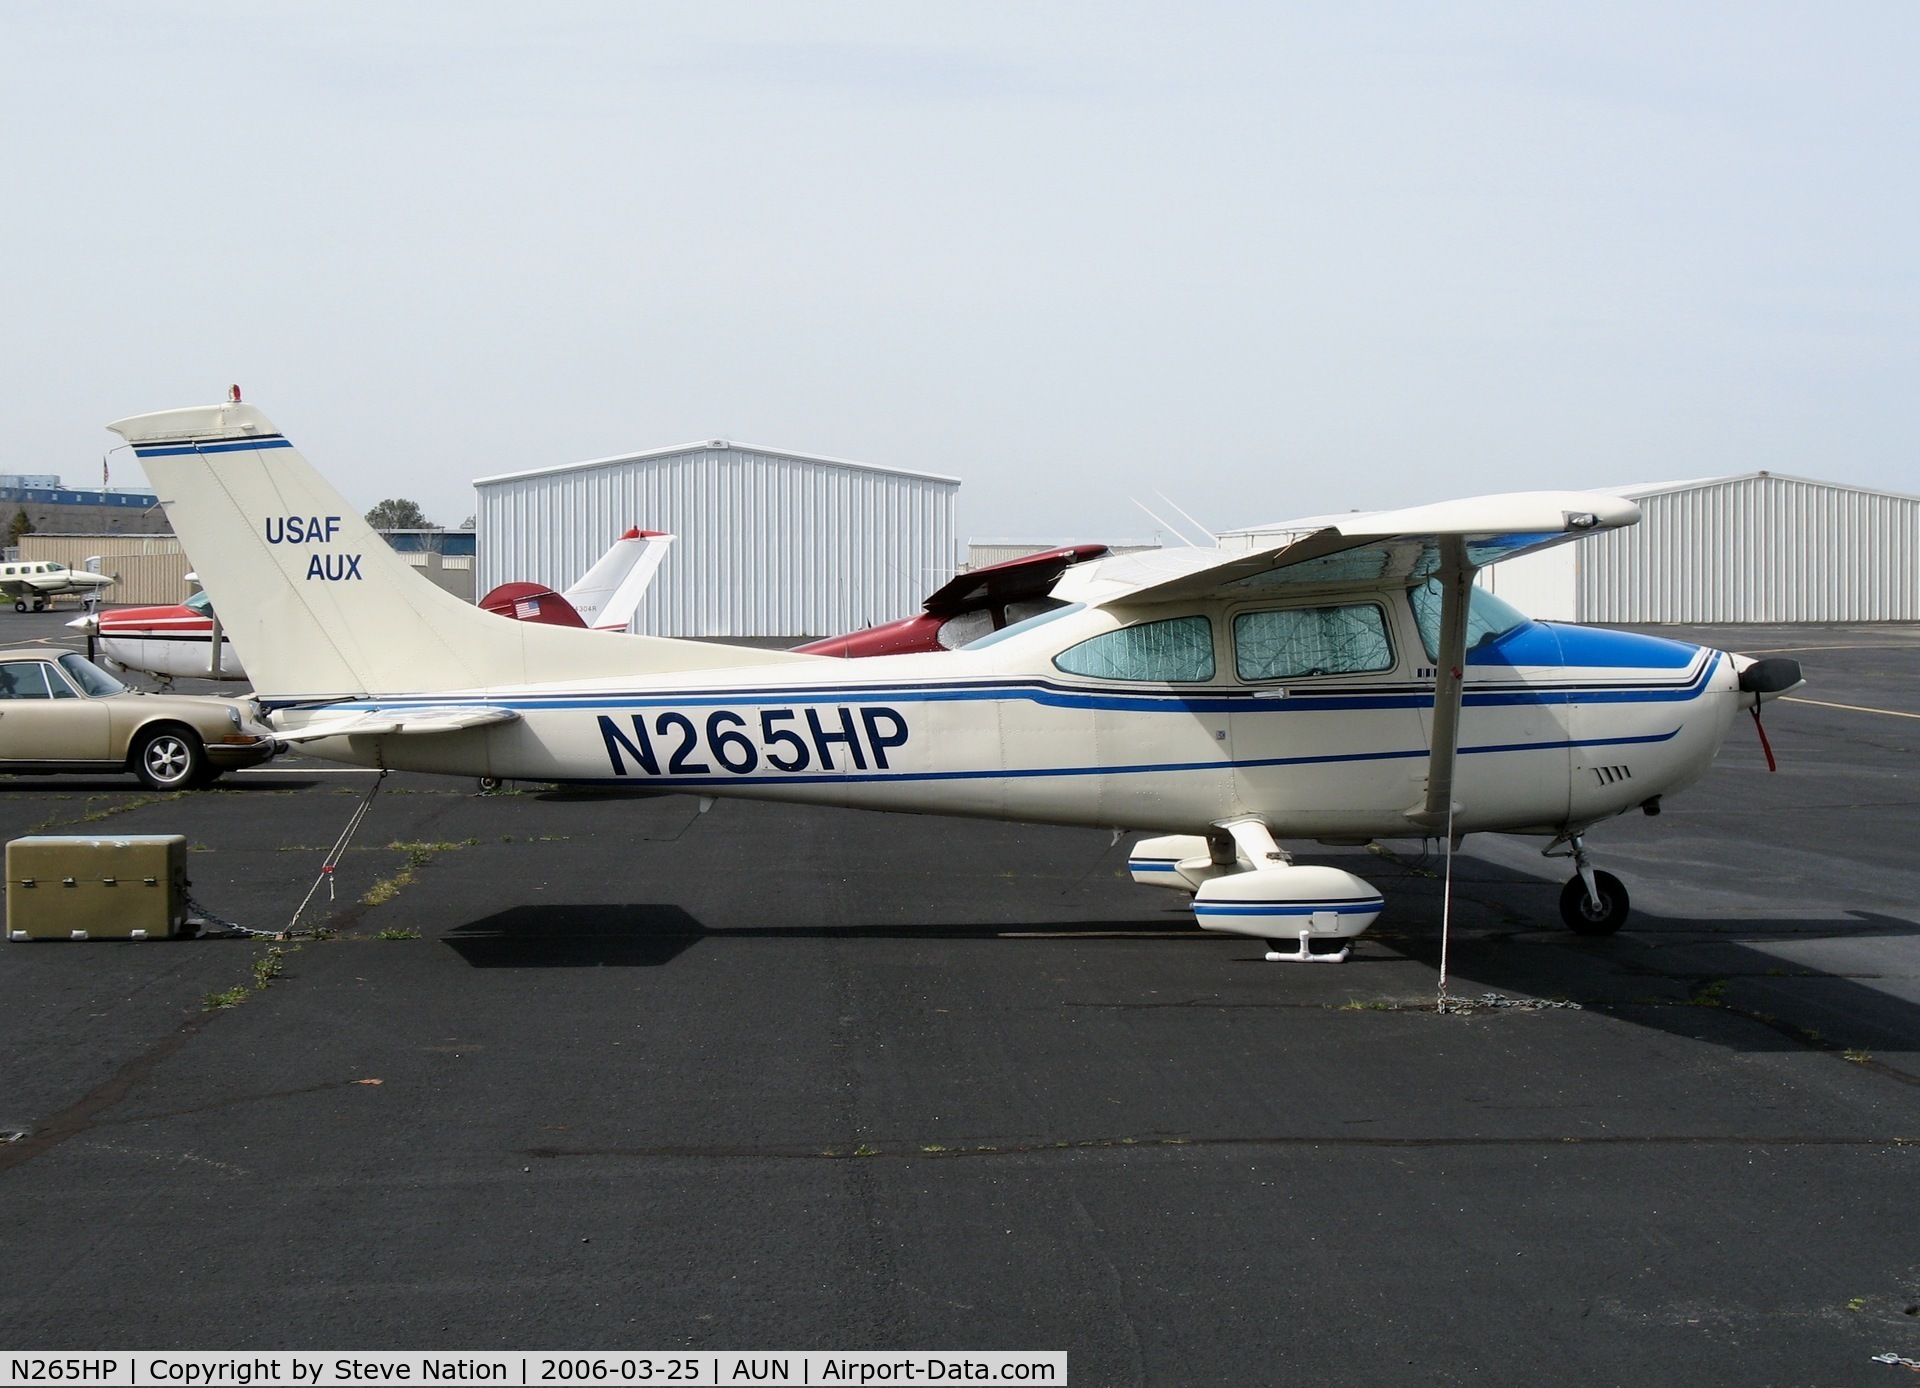 N265HP, 1985 Cessna 182 Skylane C/N 18268519, Civil Air Patrol 1985 Cessna 182 USAF AUX at Auburn Municipal Airport, CA